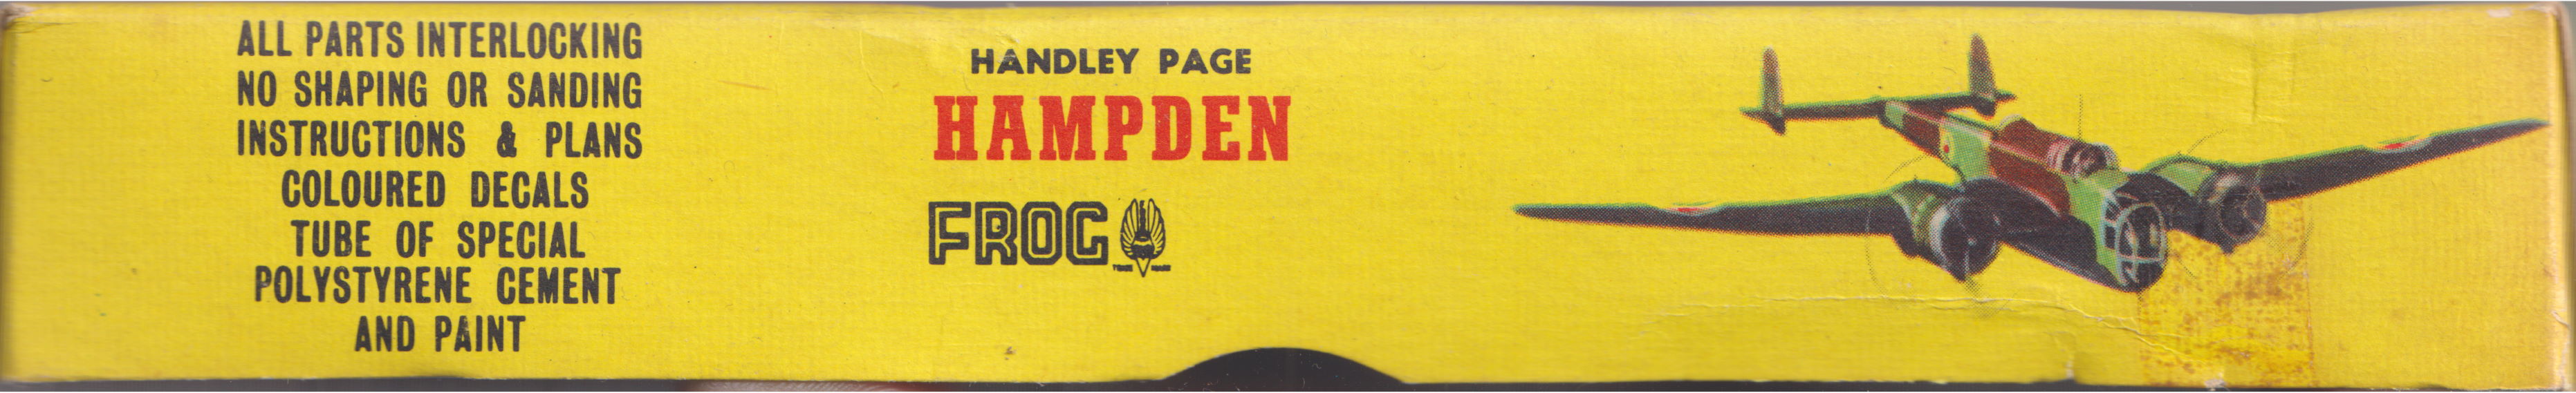 FROG 397P Handley Page Hampden, IMA Ltd 1959, box side panel